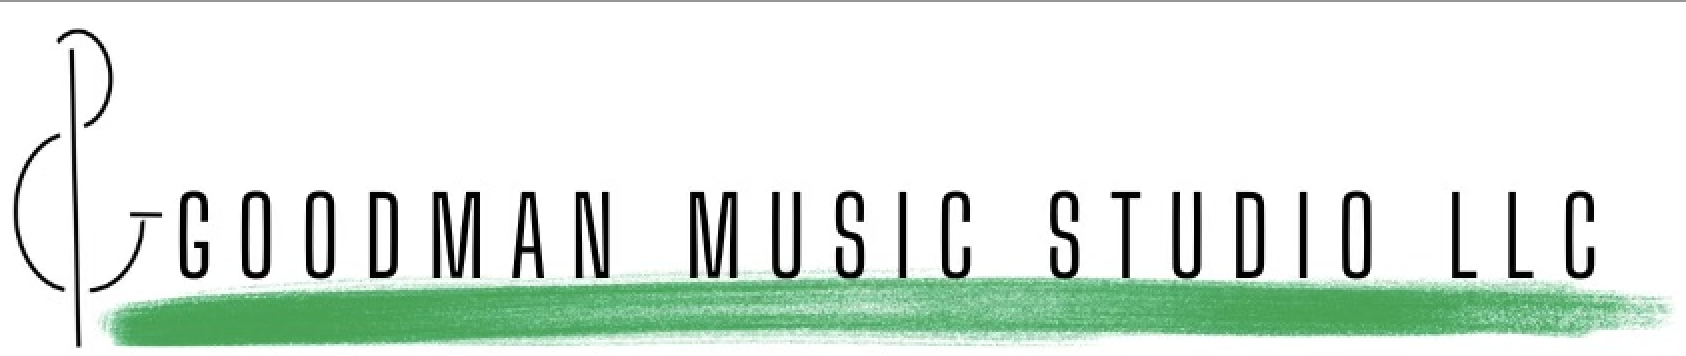 Goodman Music Studio LLC logo